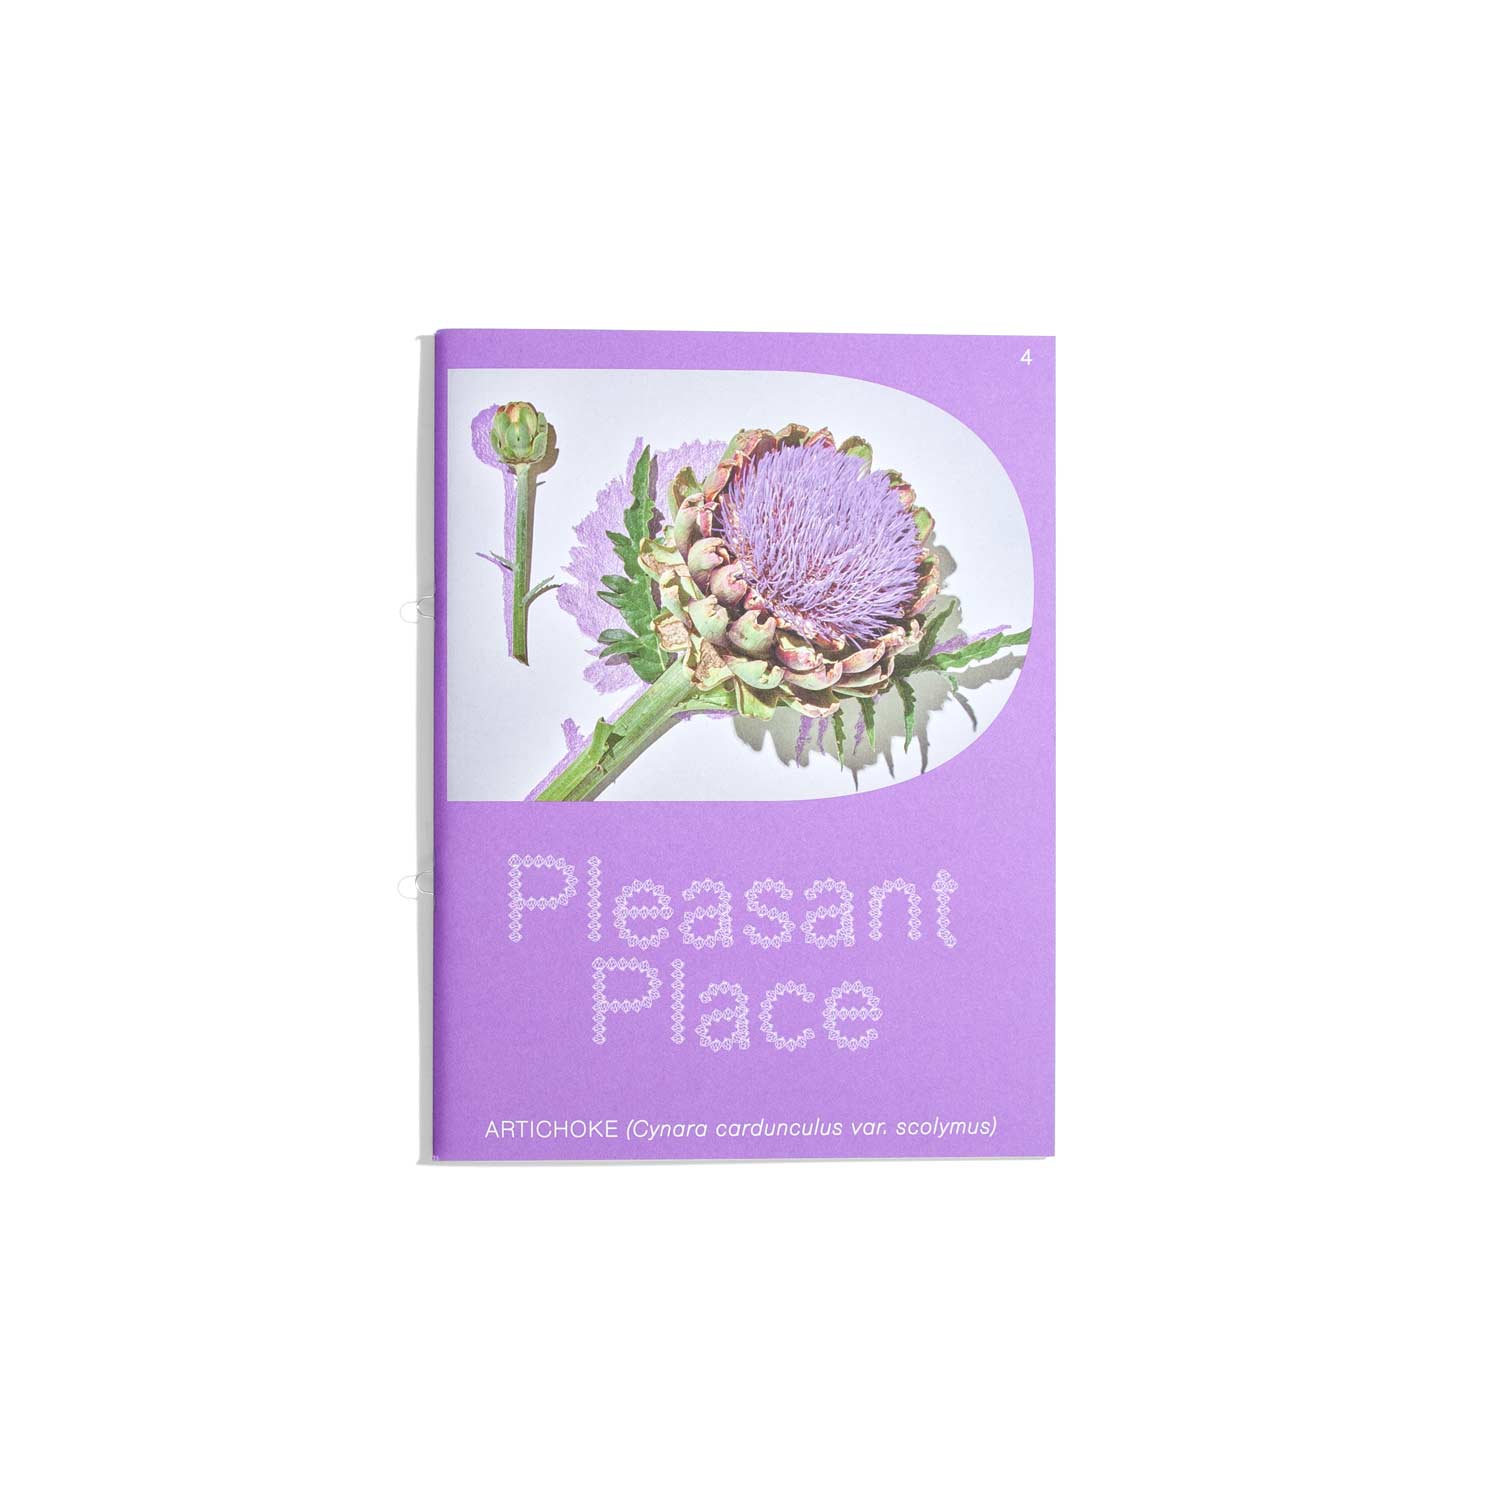 Pleasant Place - Artichoke - Issue #4